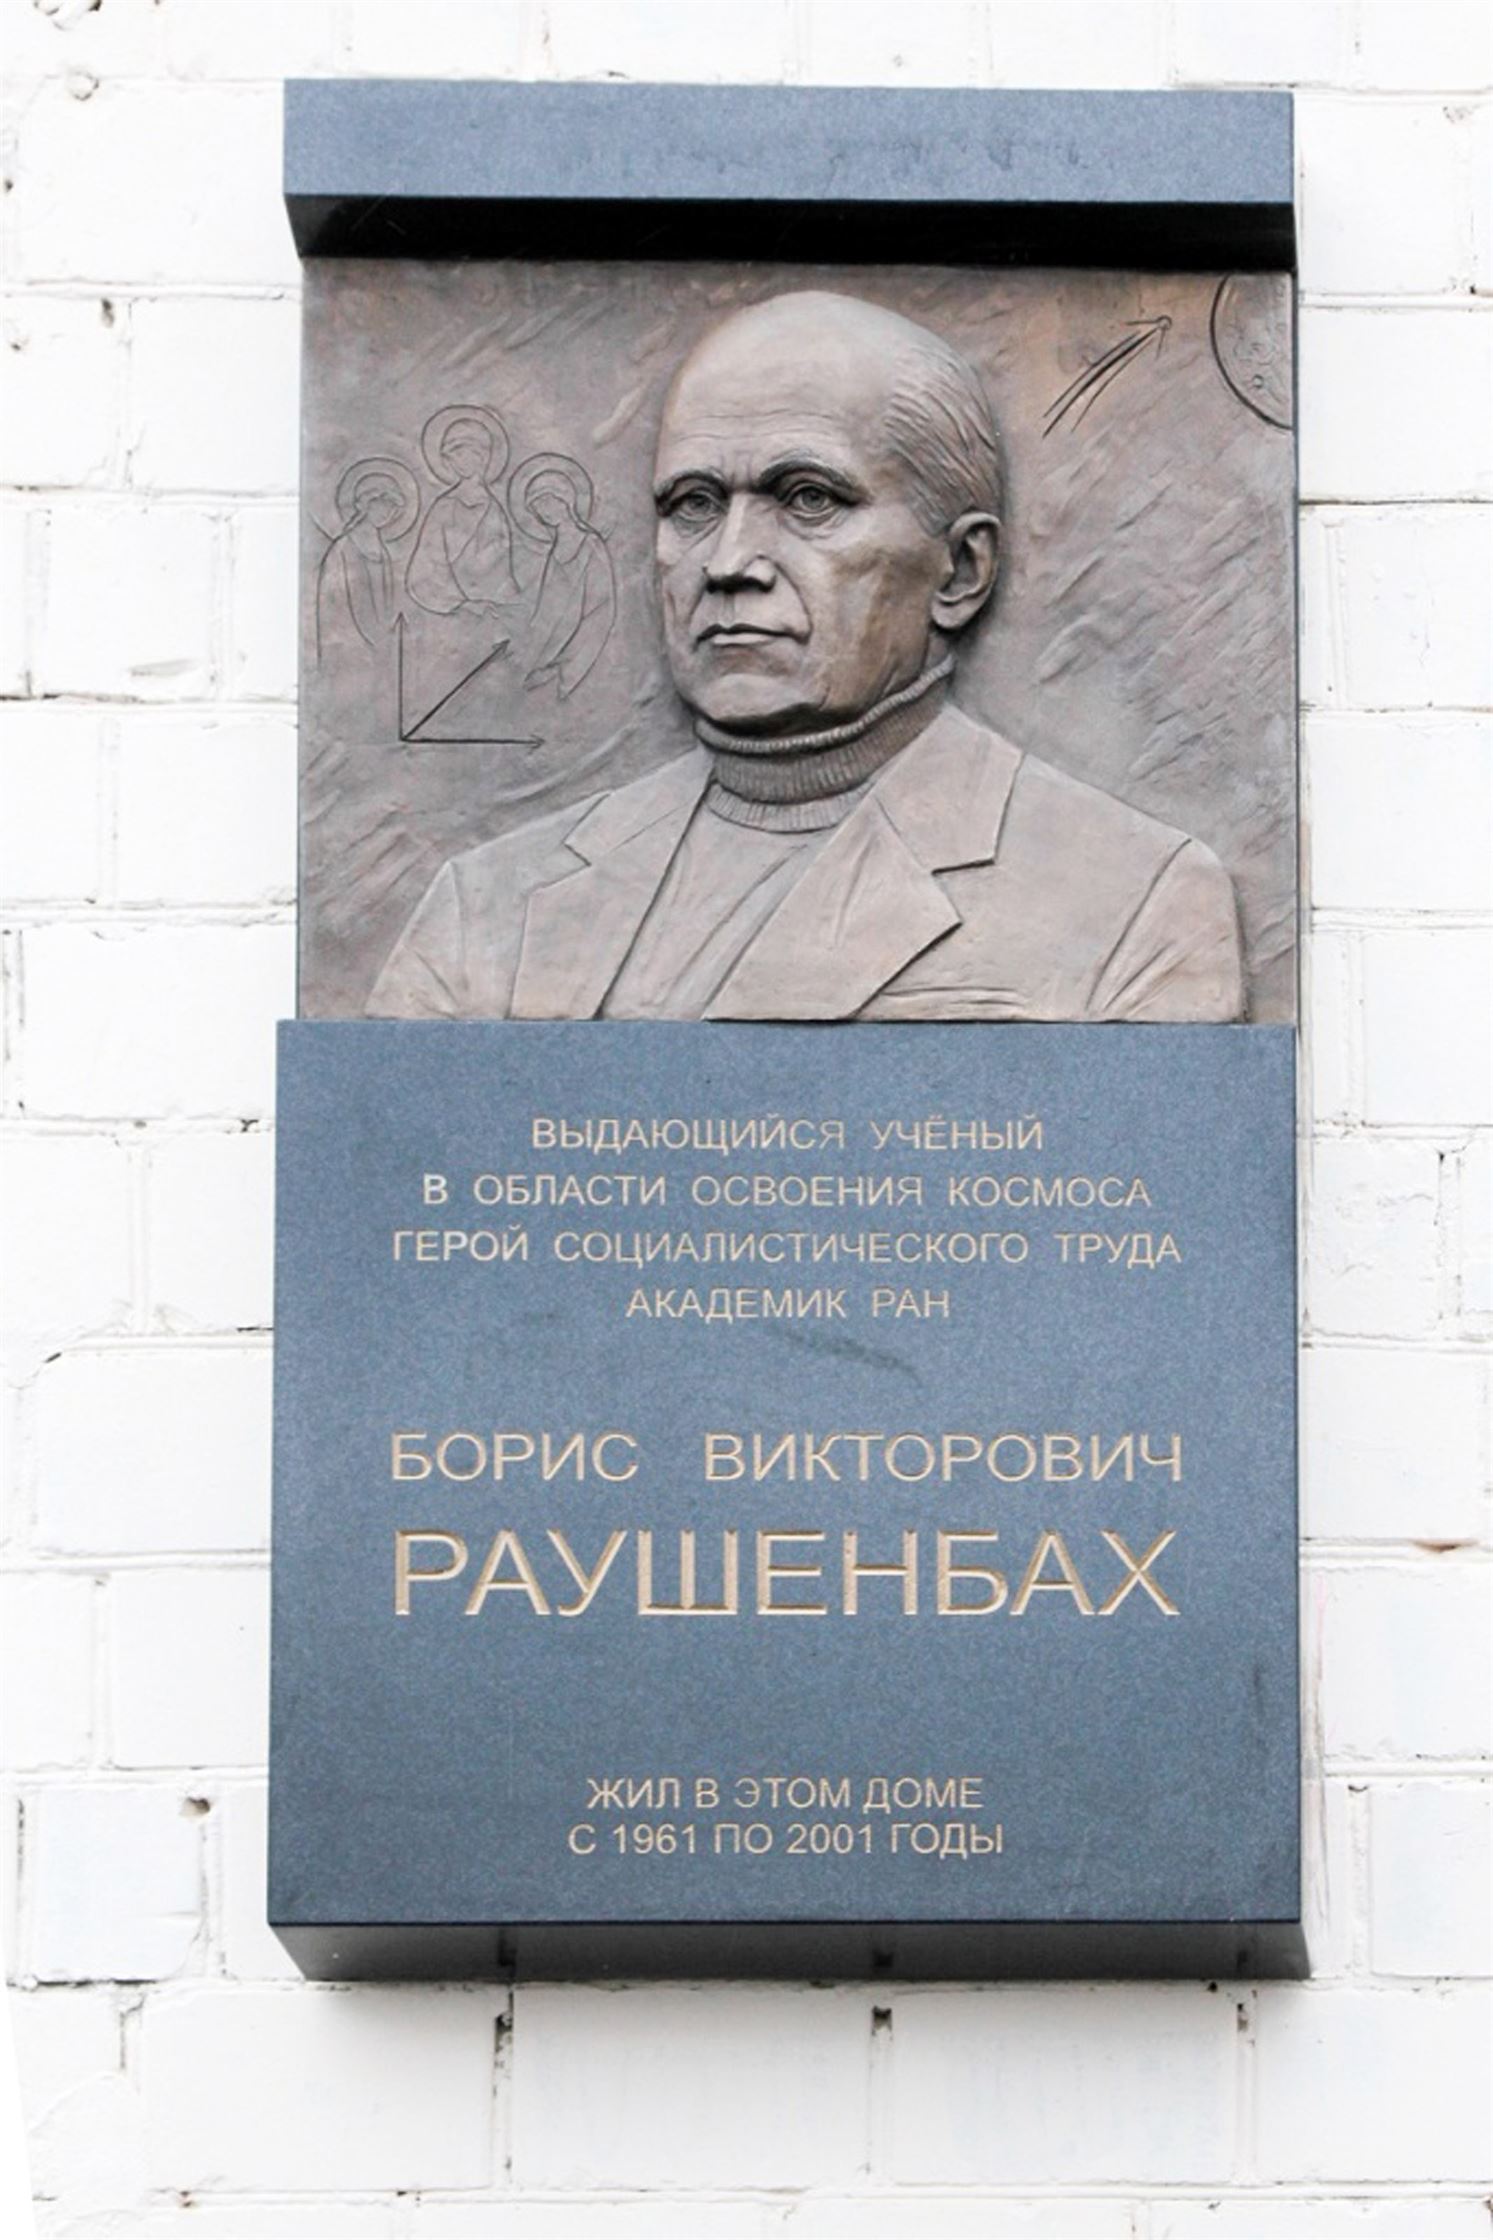 Мемориальная доска академику Б.В. Раушенбаху. 2016